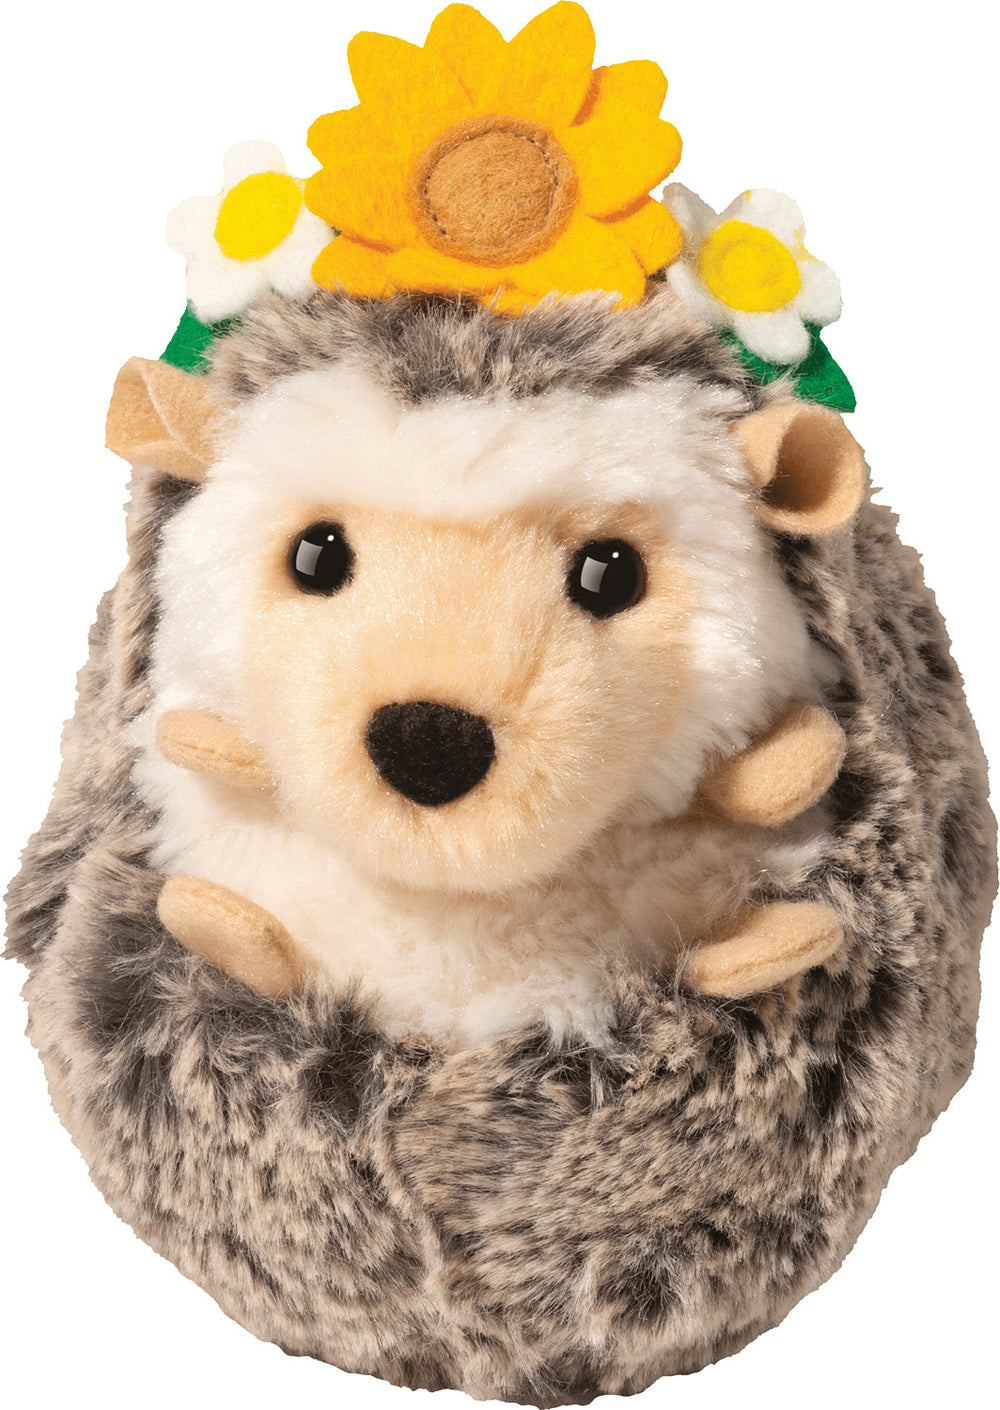 Wildflower Spunky Hedgehog